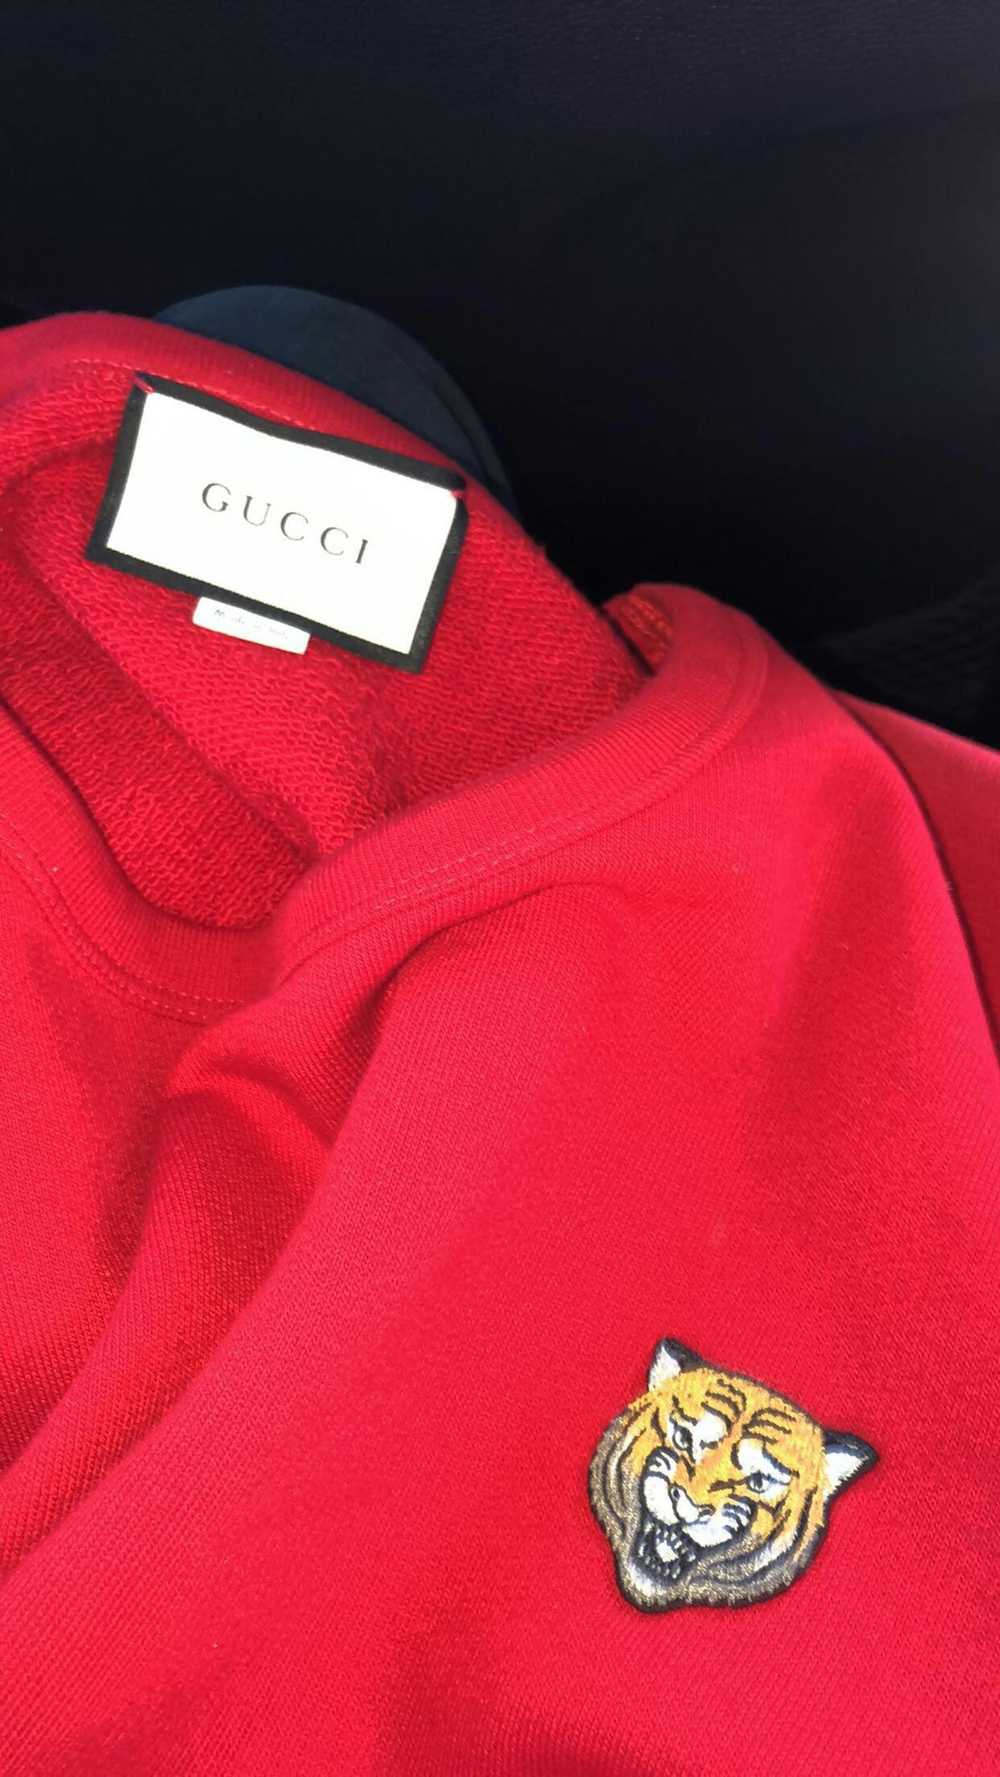 Gucci Gucci Tiger Sweatshirt - image 1